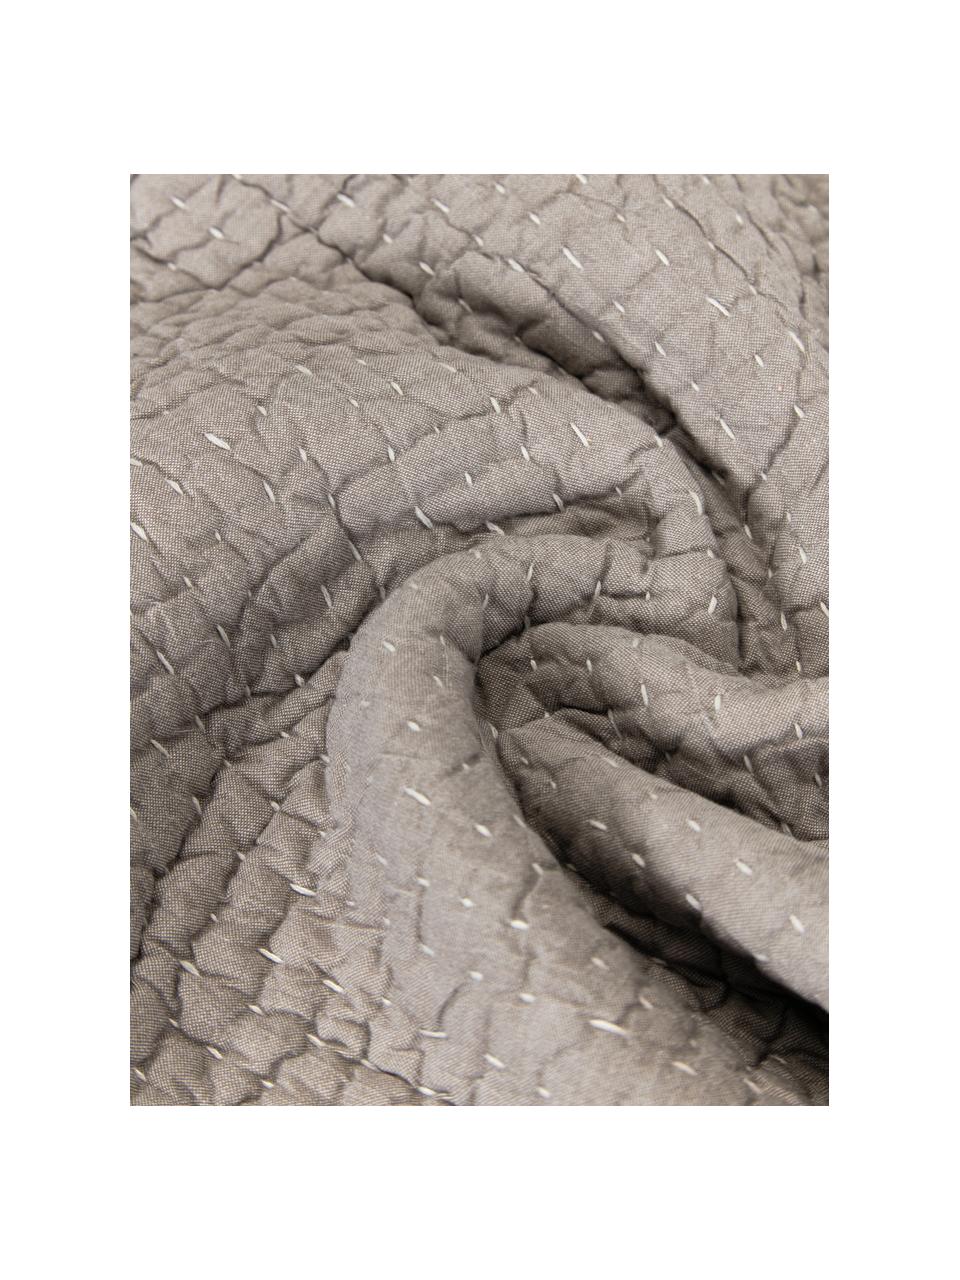 Kussenhoes Stripes in grijs, 100% katoen, Grijs, B 45 x L 45 cm